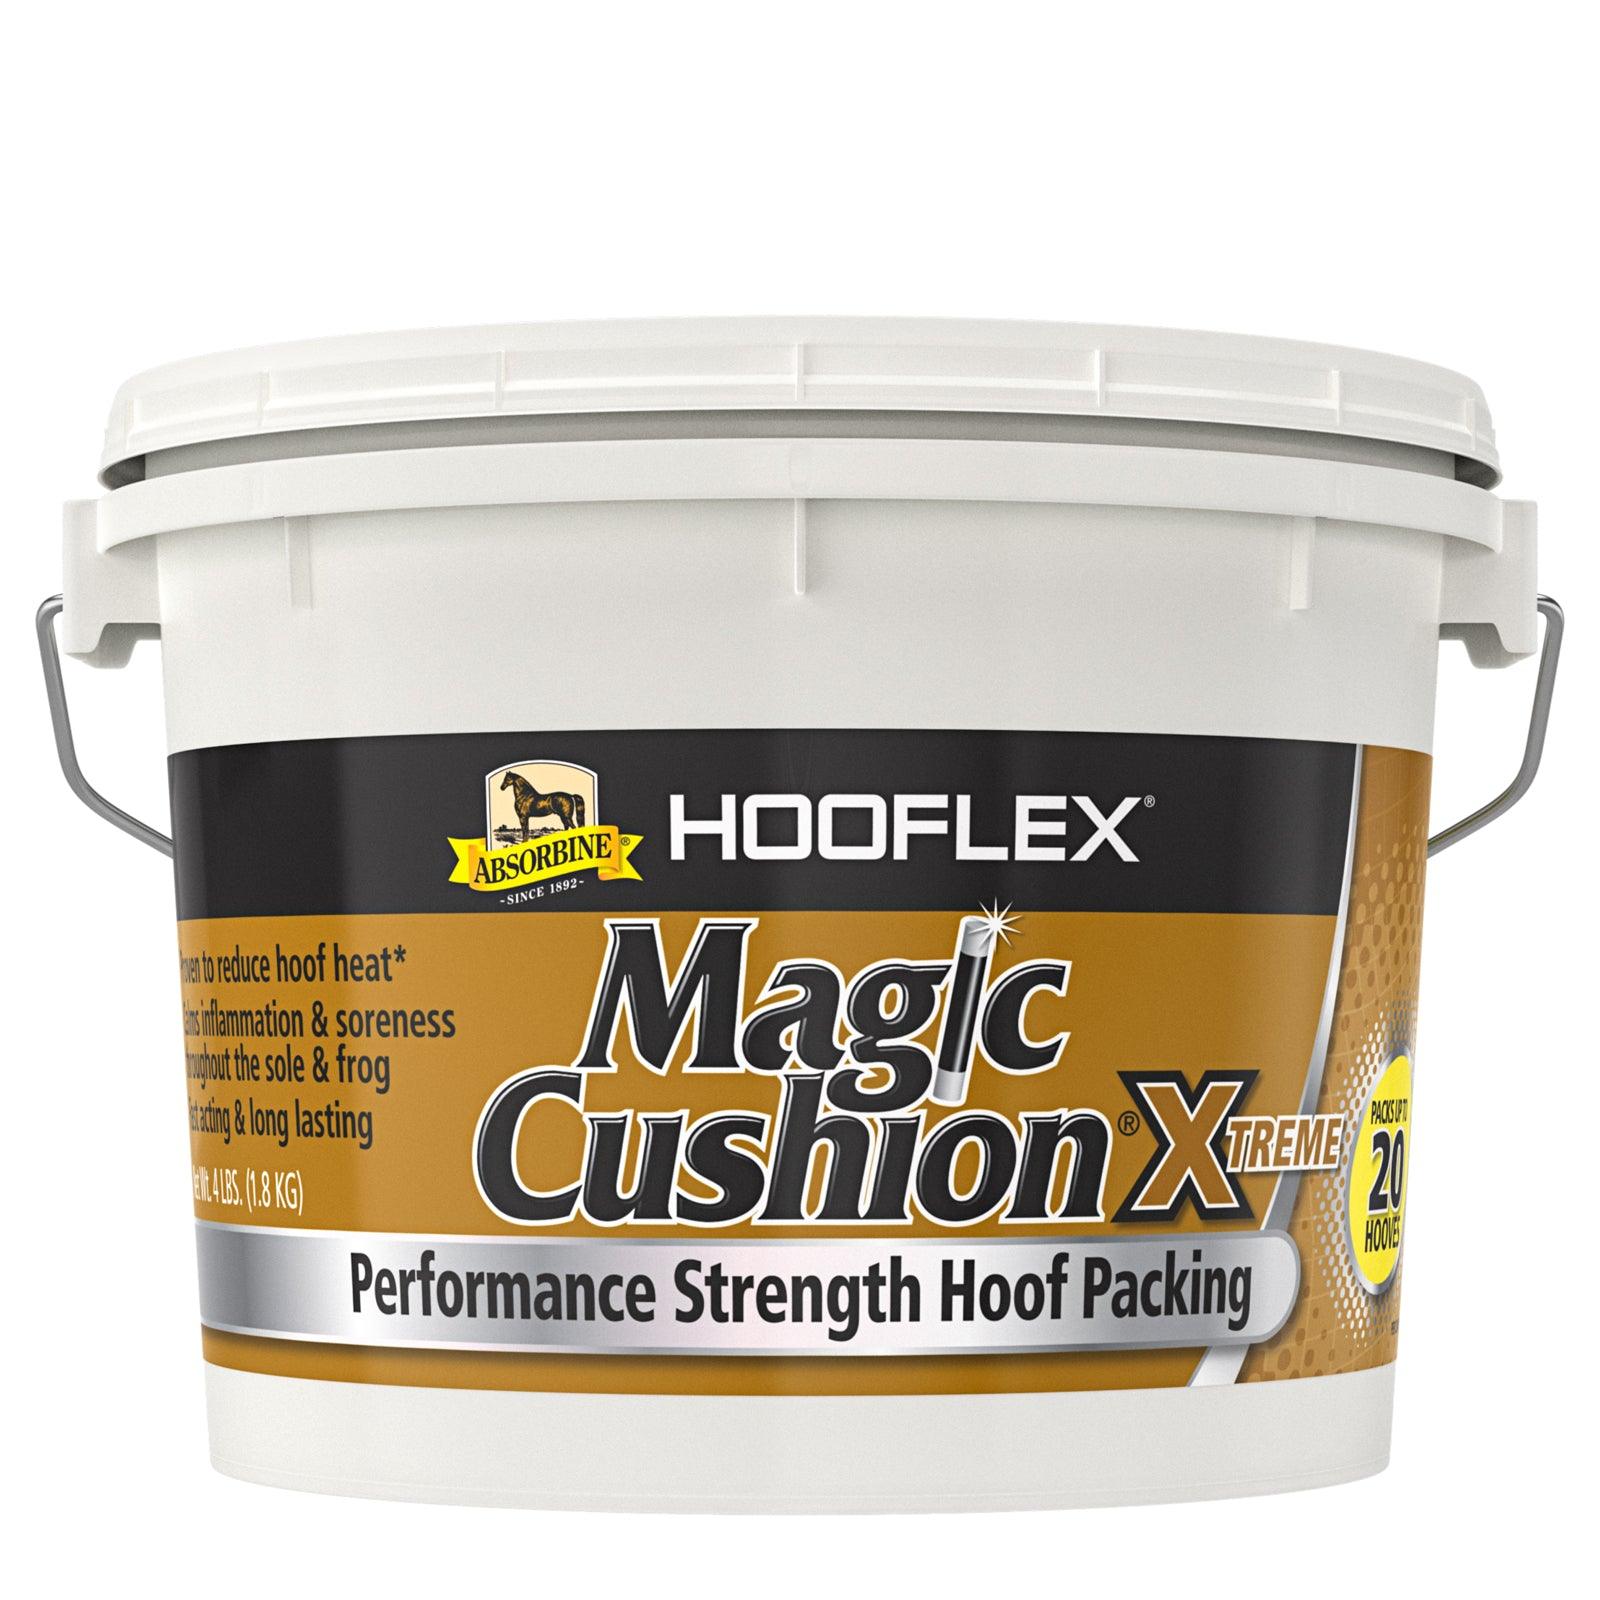 Magic Cushion® Xtreme Hoof Packing Hoof Care absorbine 4 lb.  